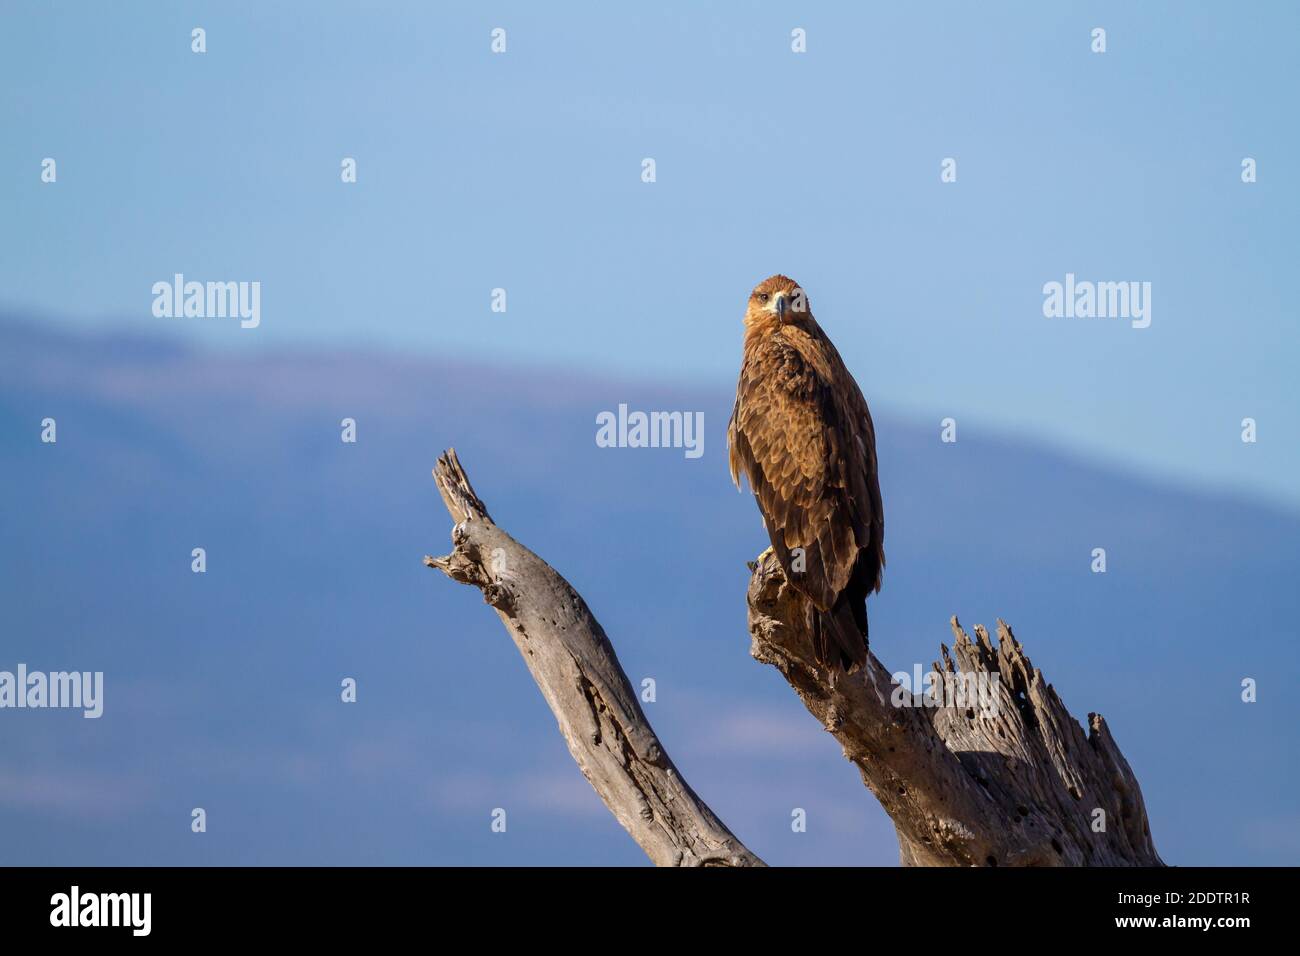 Tawny eagle, Aquila rapax, bird of prey perched on tree branch with eye facing forward. Ol Pejeta Conservancy, Kenya, Africa. Birdwatching on safari Stock Photo